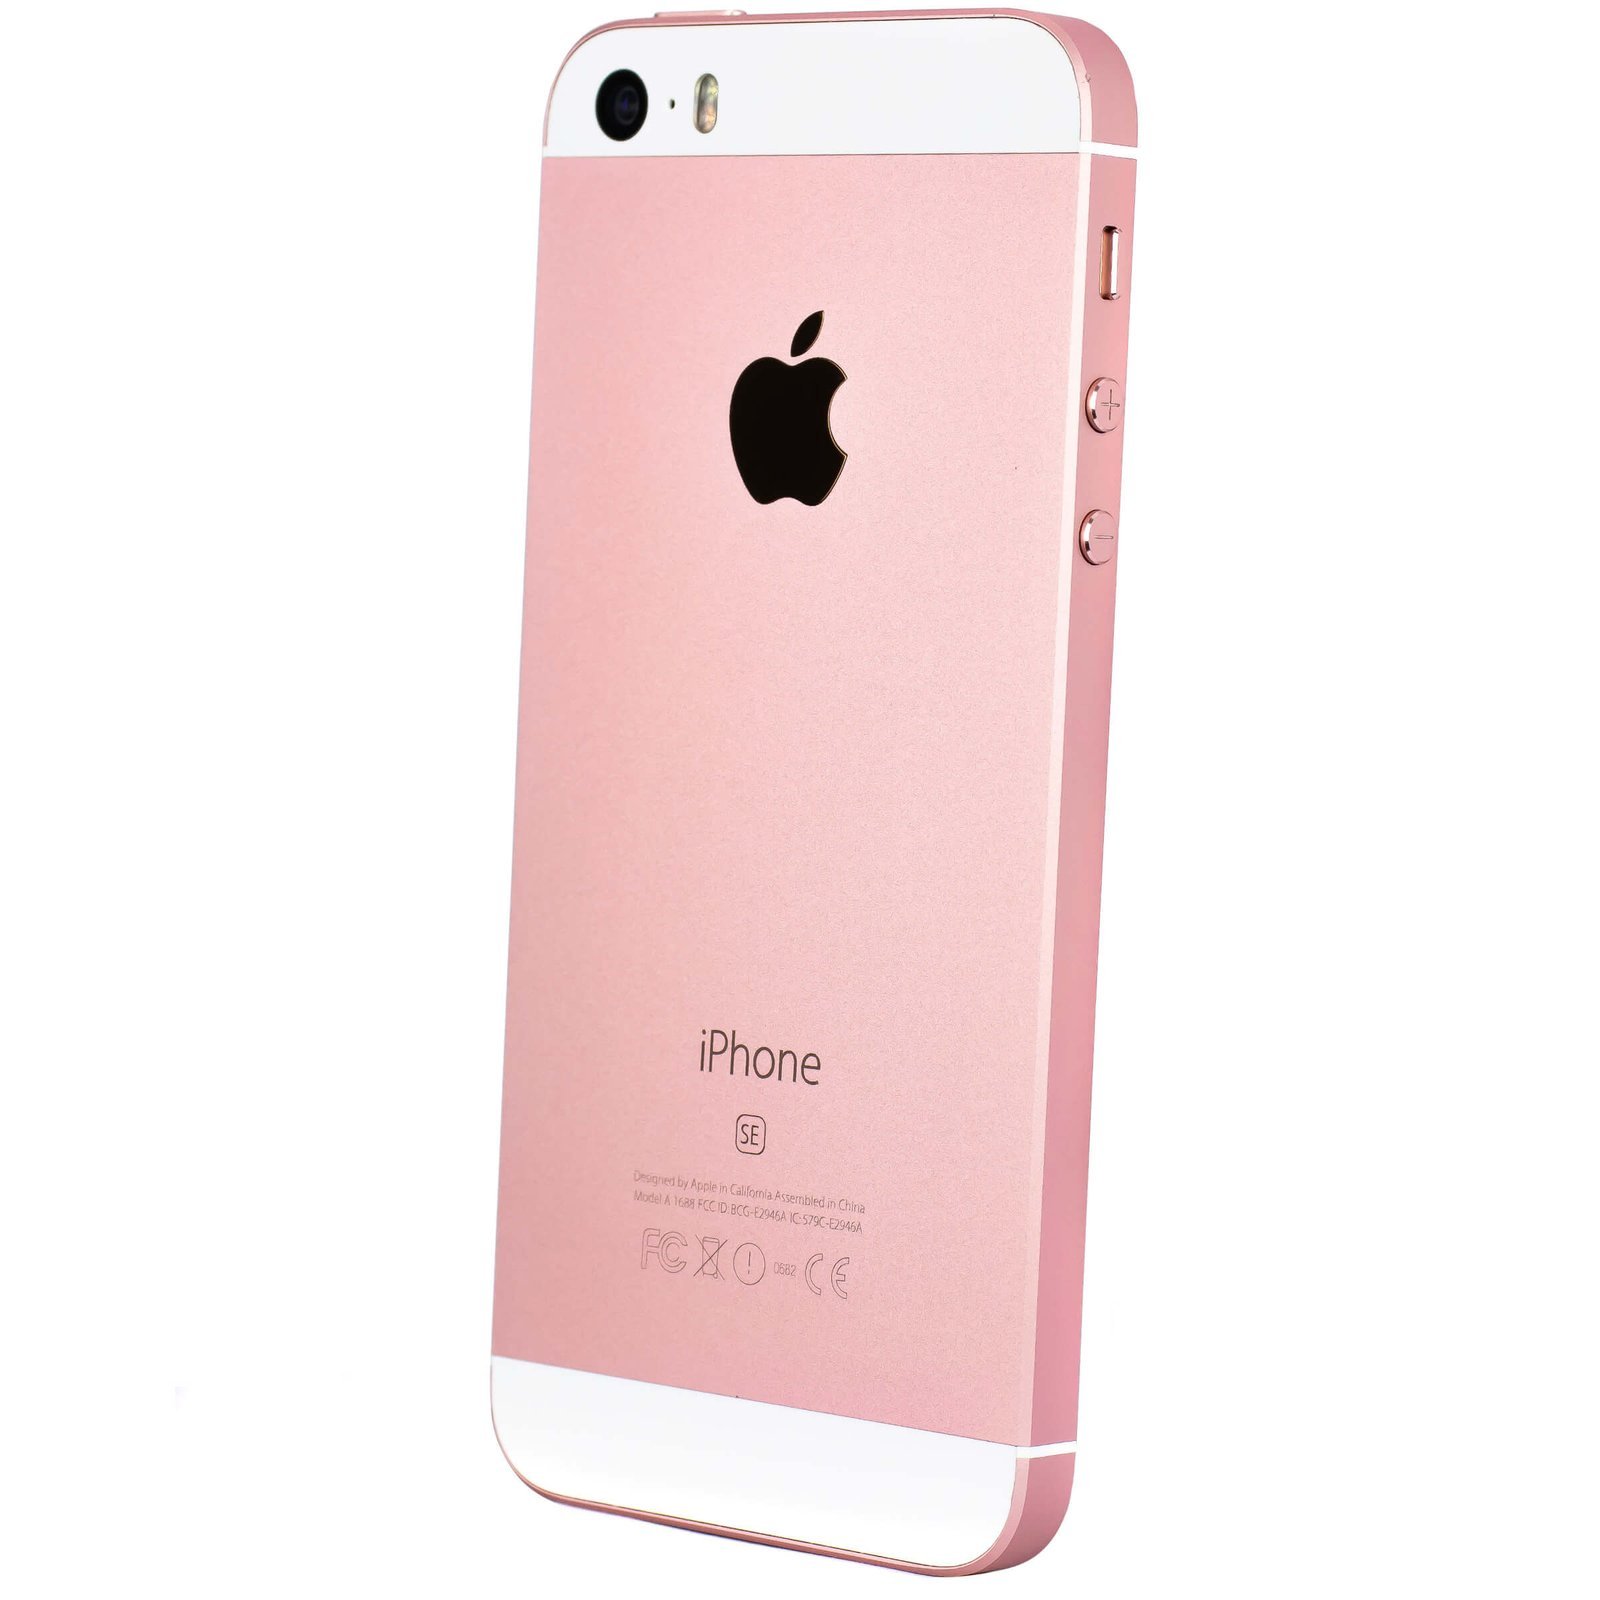 Apple iPhone SE Rose Gold 32GB A1723 Smartfon - Like New